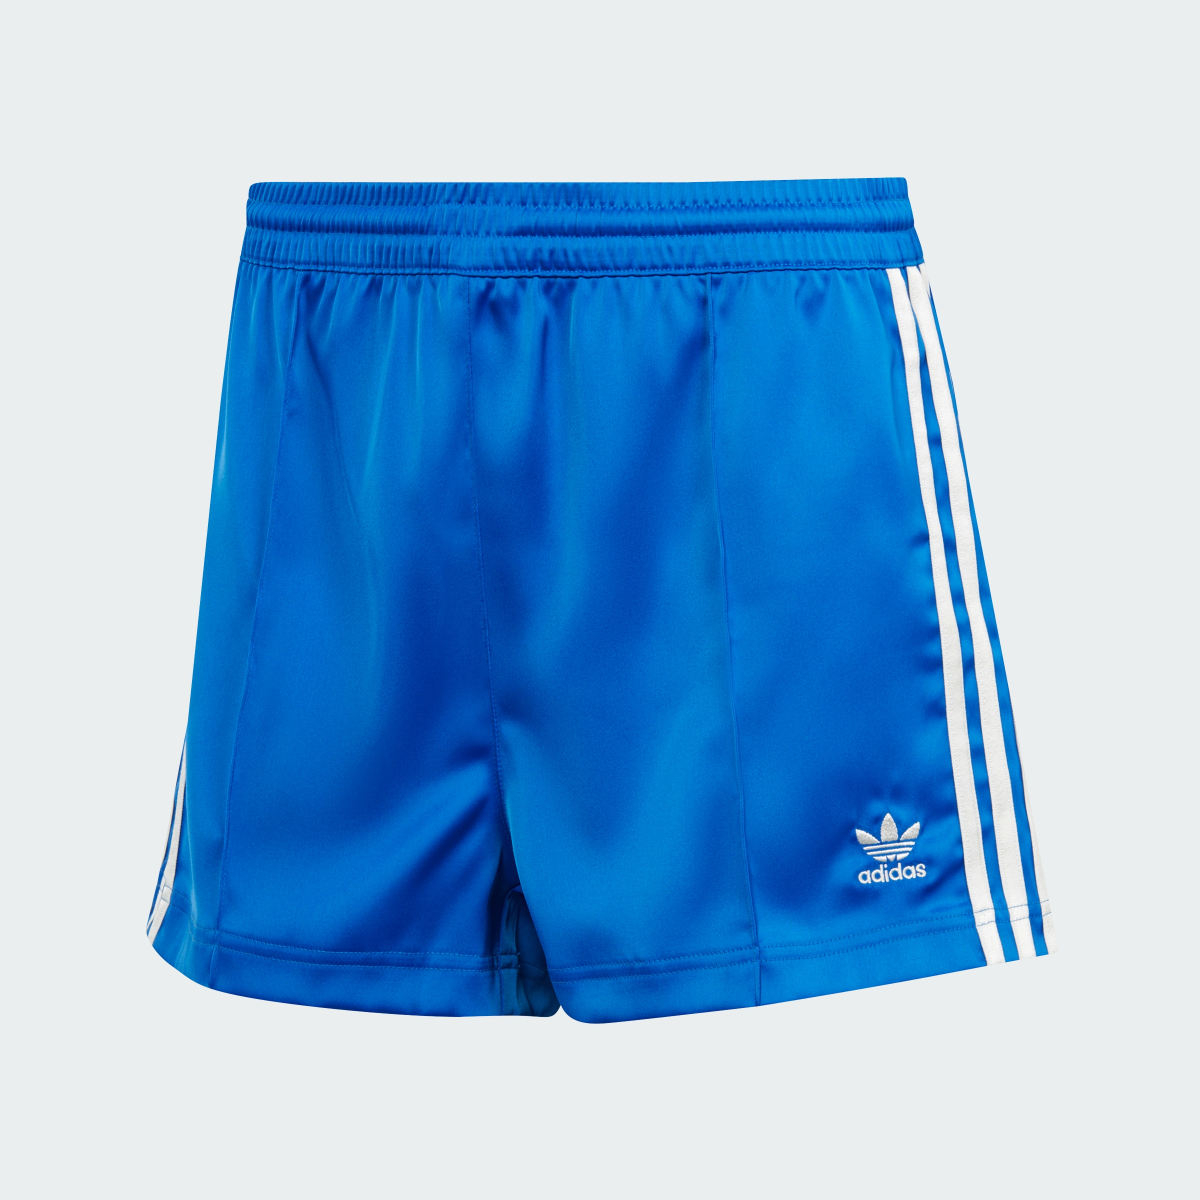 Adidas 3-Stripes Satin Shorts. 4